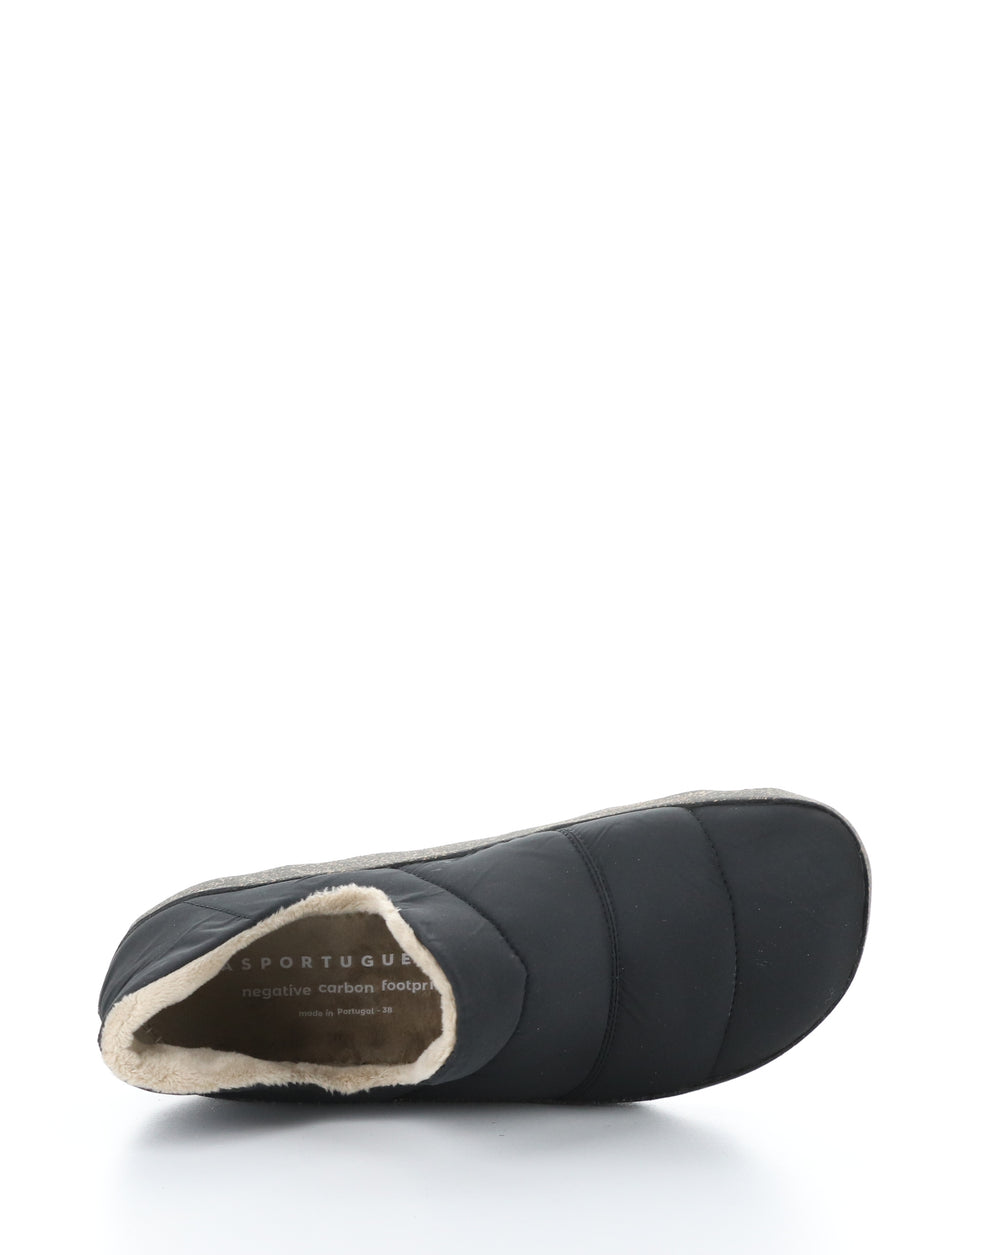 CRUS145ASP Black Round Toe Shoes